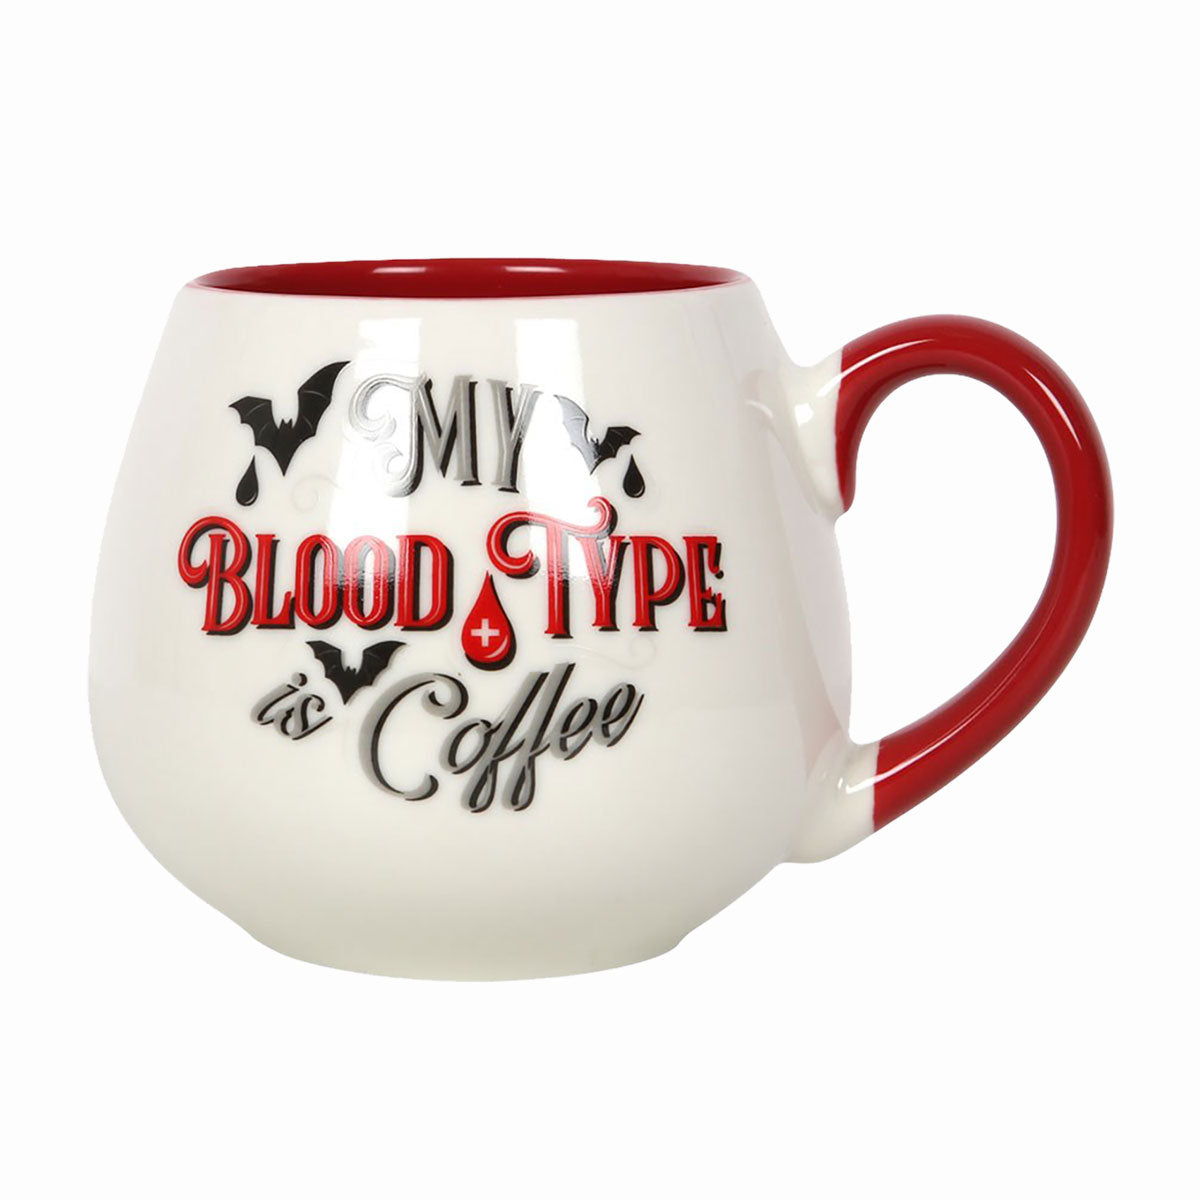 MY BLOOD TYPE IS COFFEE - Tazza arrotondata bianca